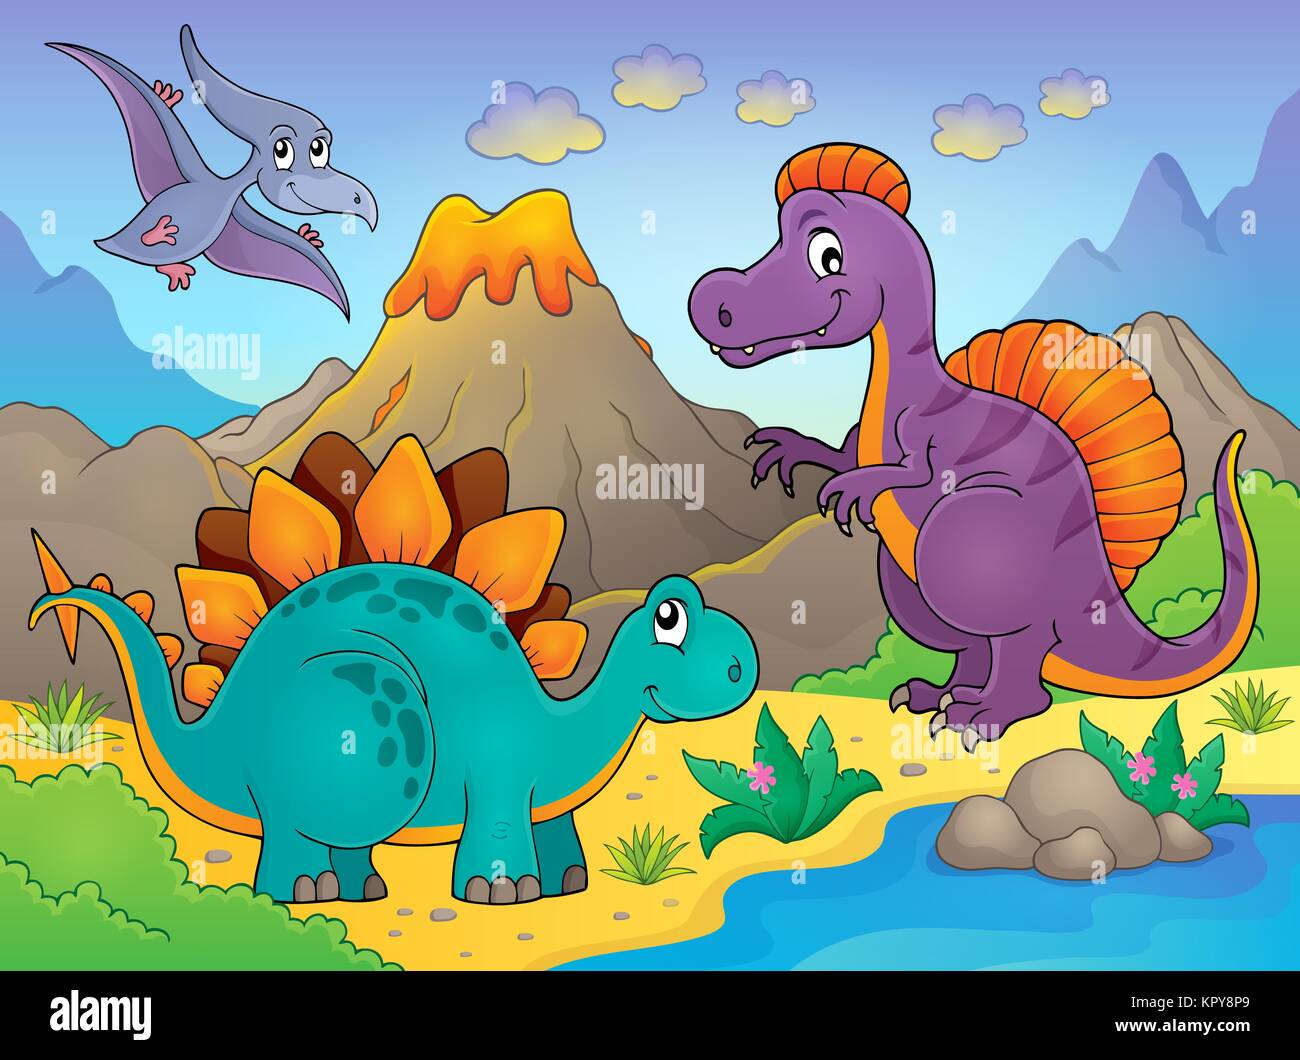 dinosaur-topic-image-5-stock-photo-alamy